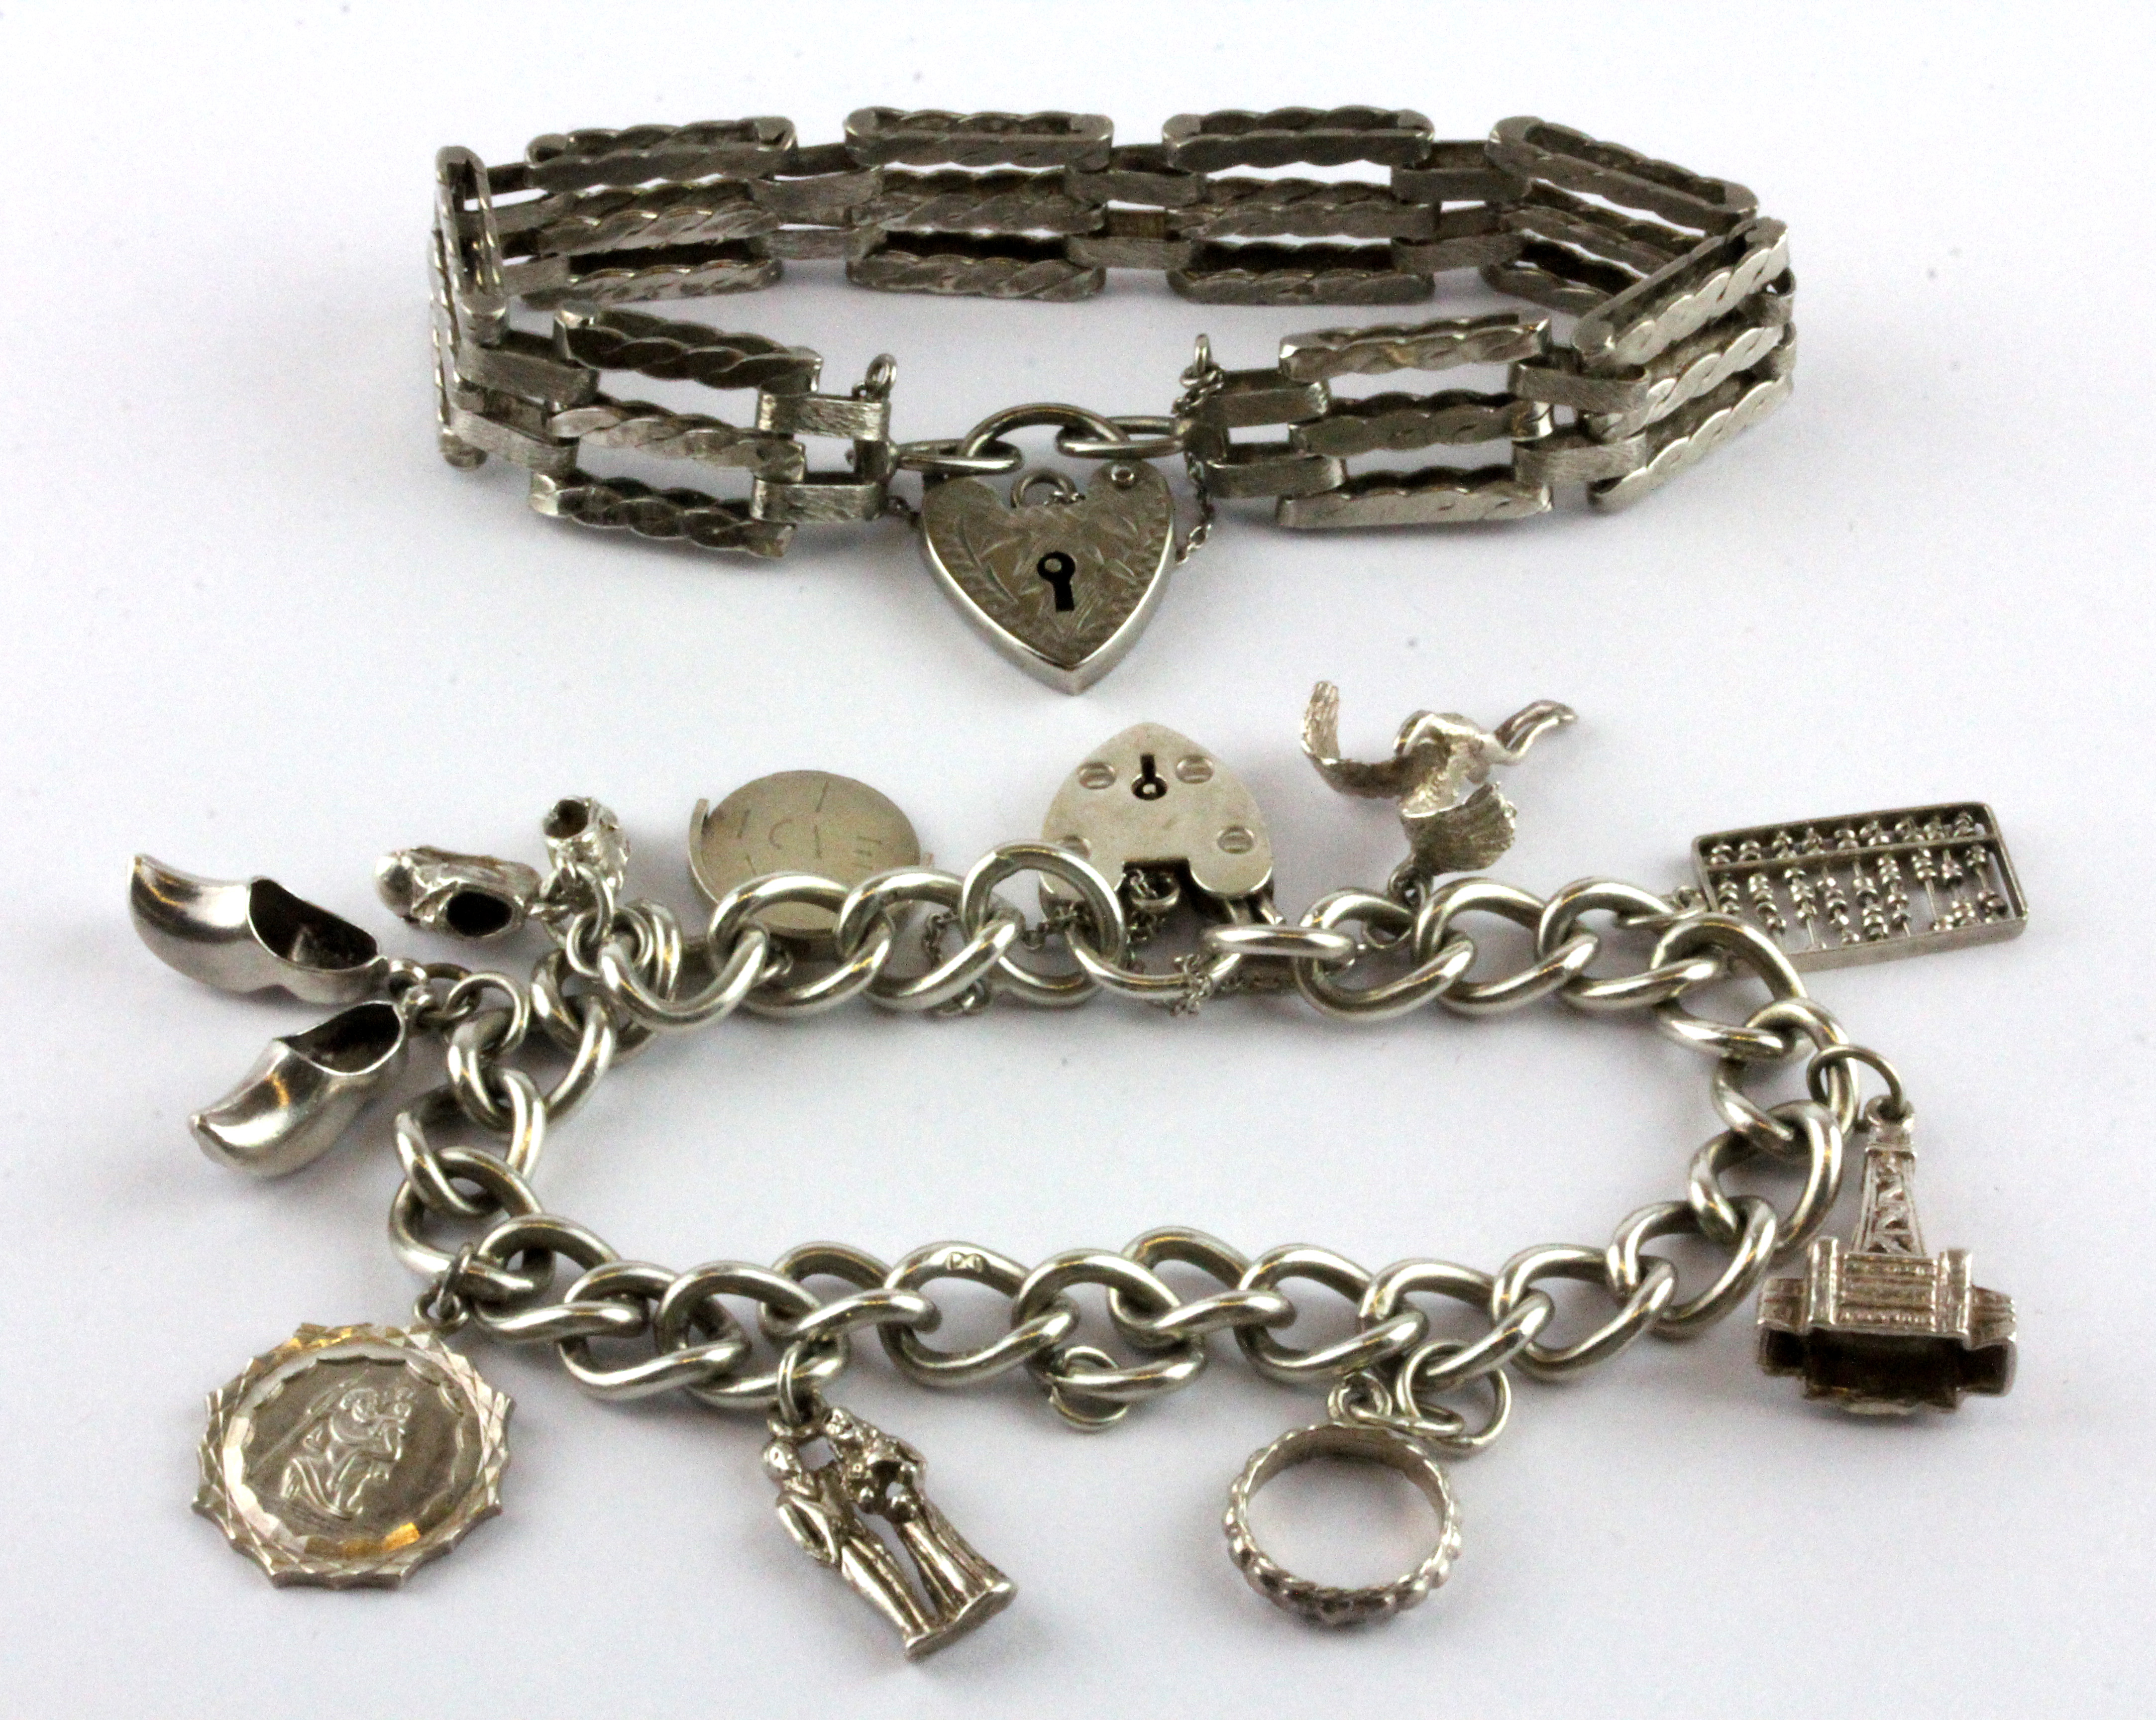 A hallmarked silver triple gate bracelet together with a hallmarked silver charm bracelet.